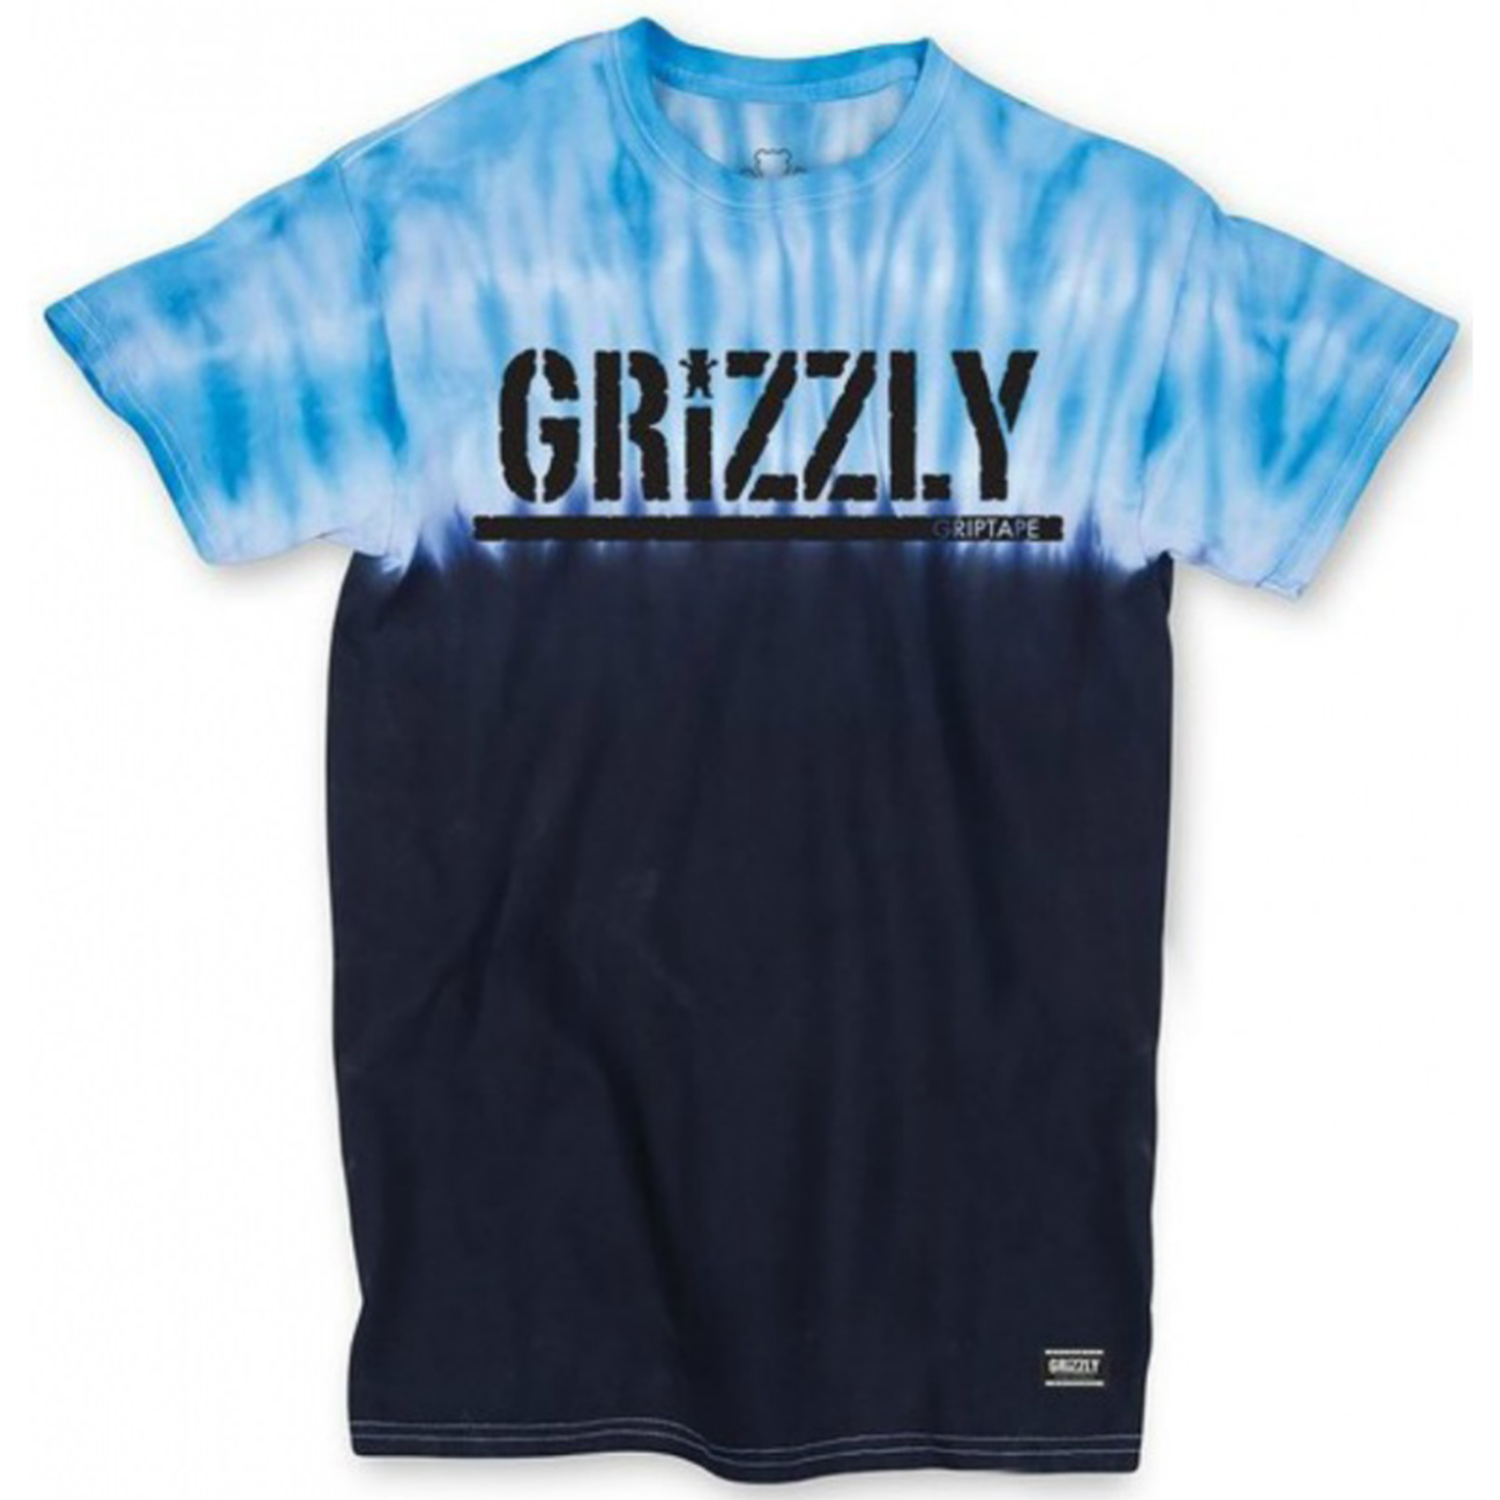 Grizzly Fire Blue Tie Dye